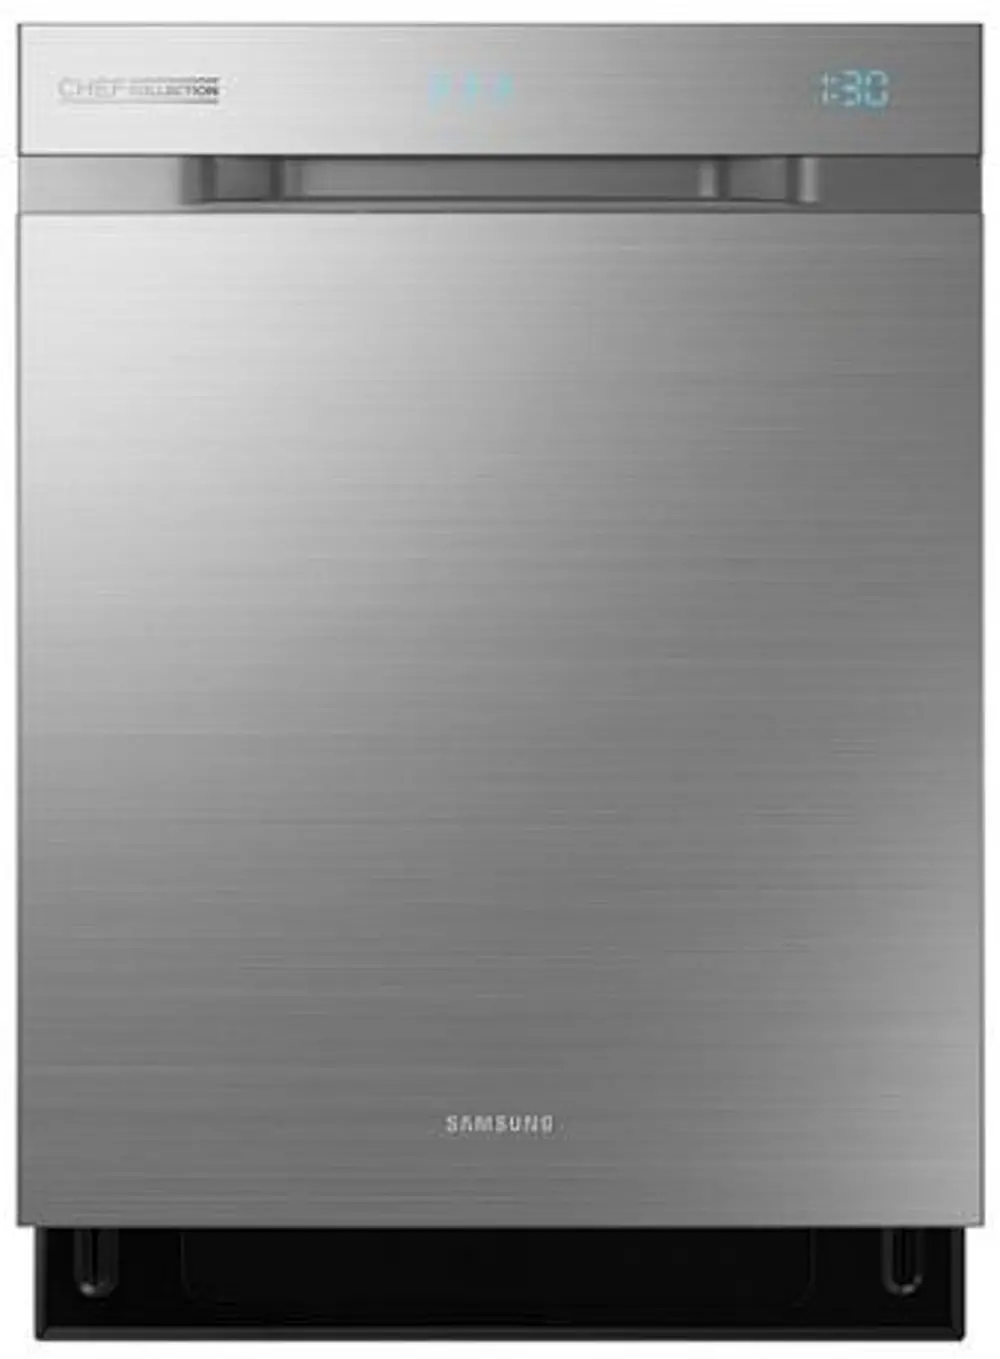 DW80H9970US Samsung Dishwasher - Stainless Steel-1